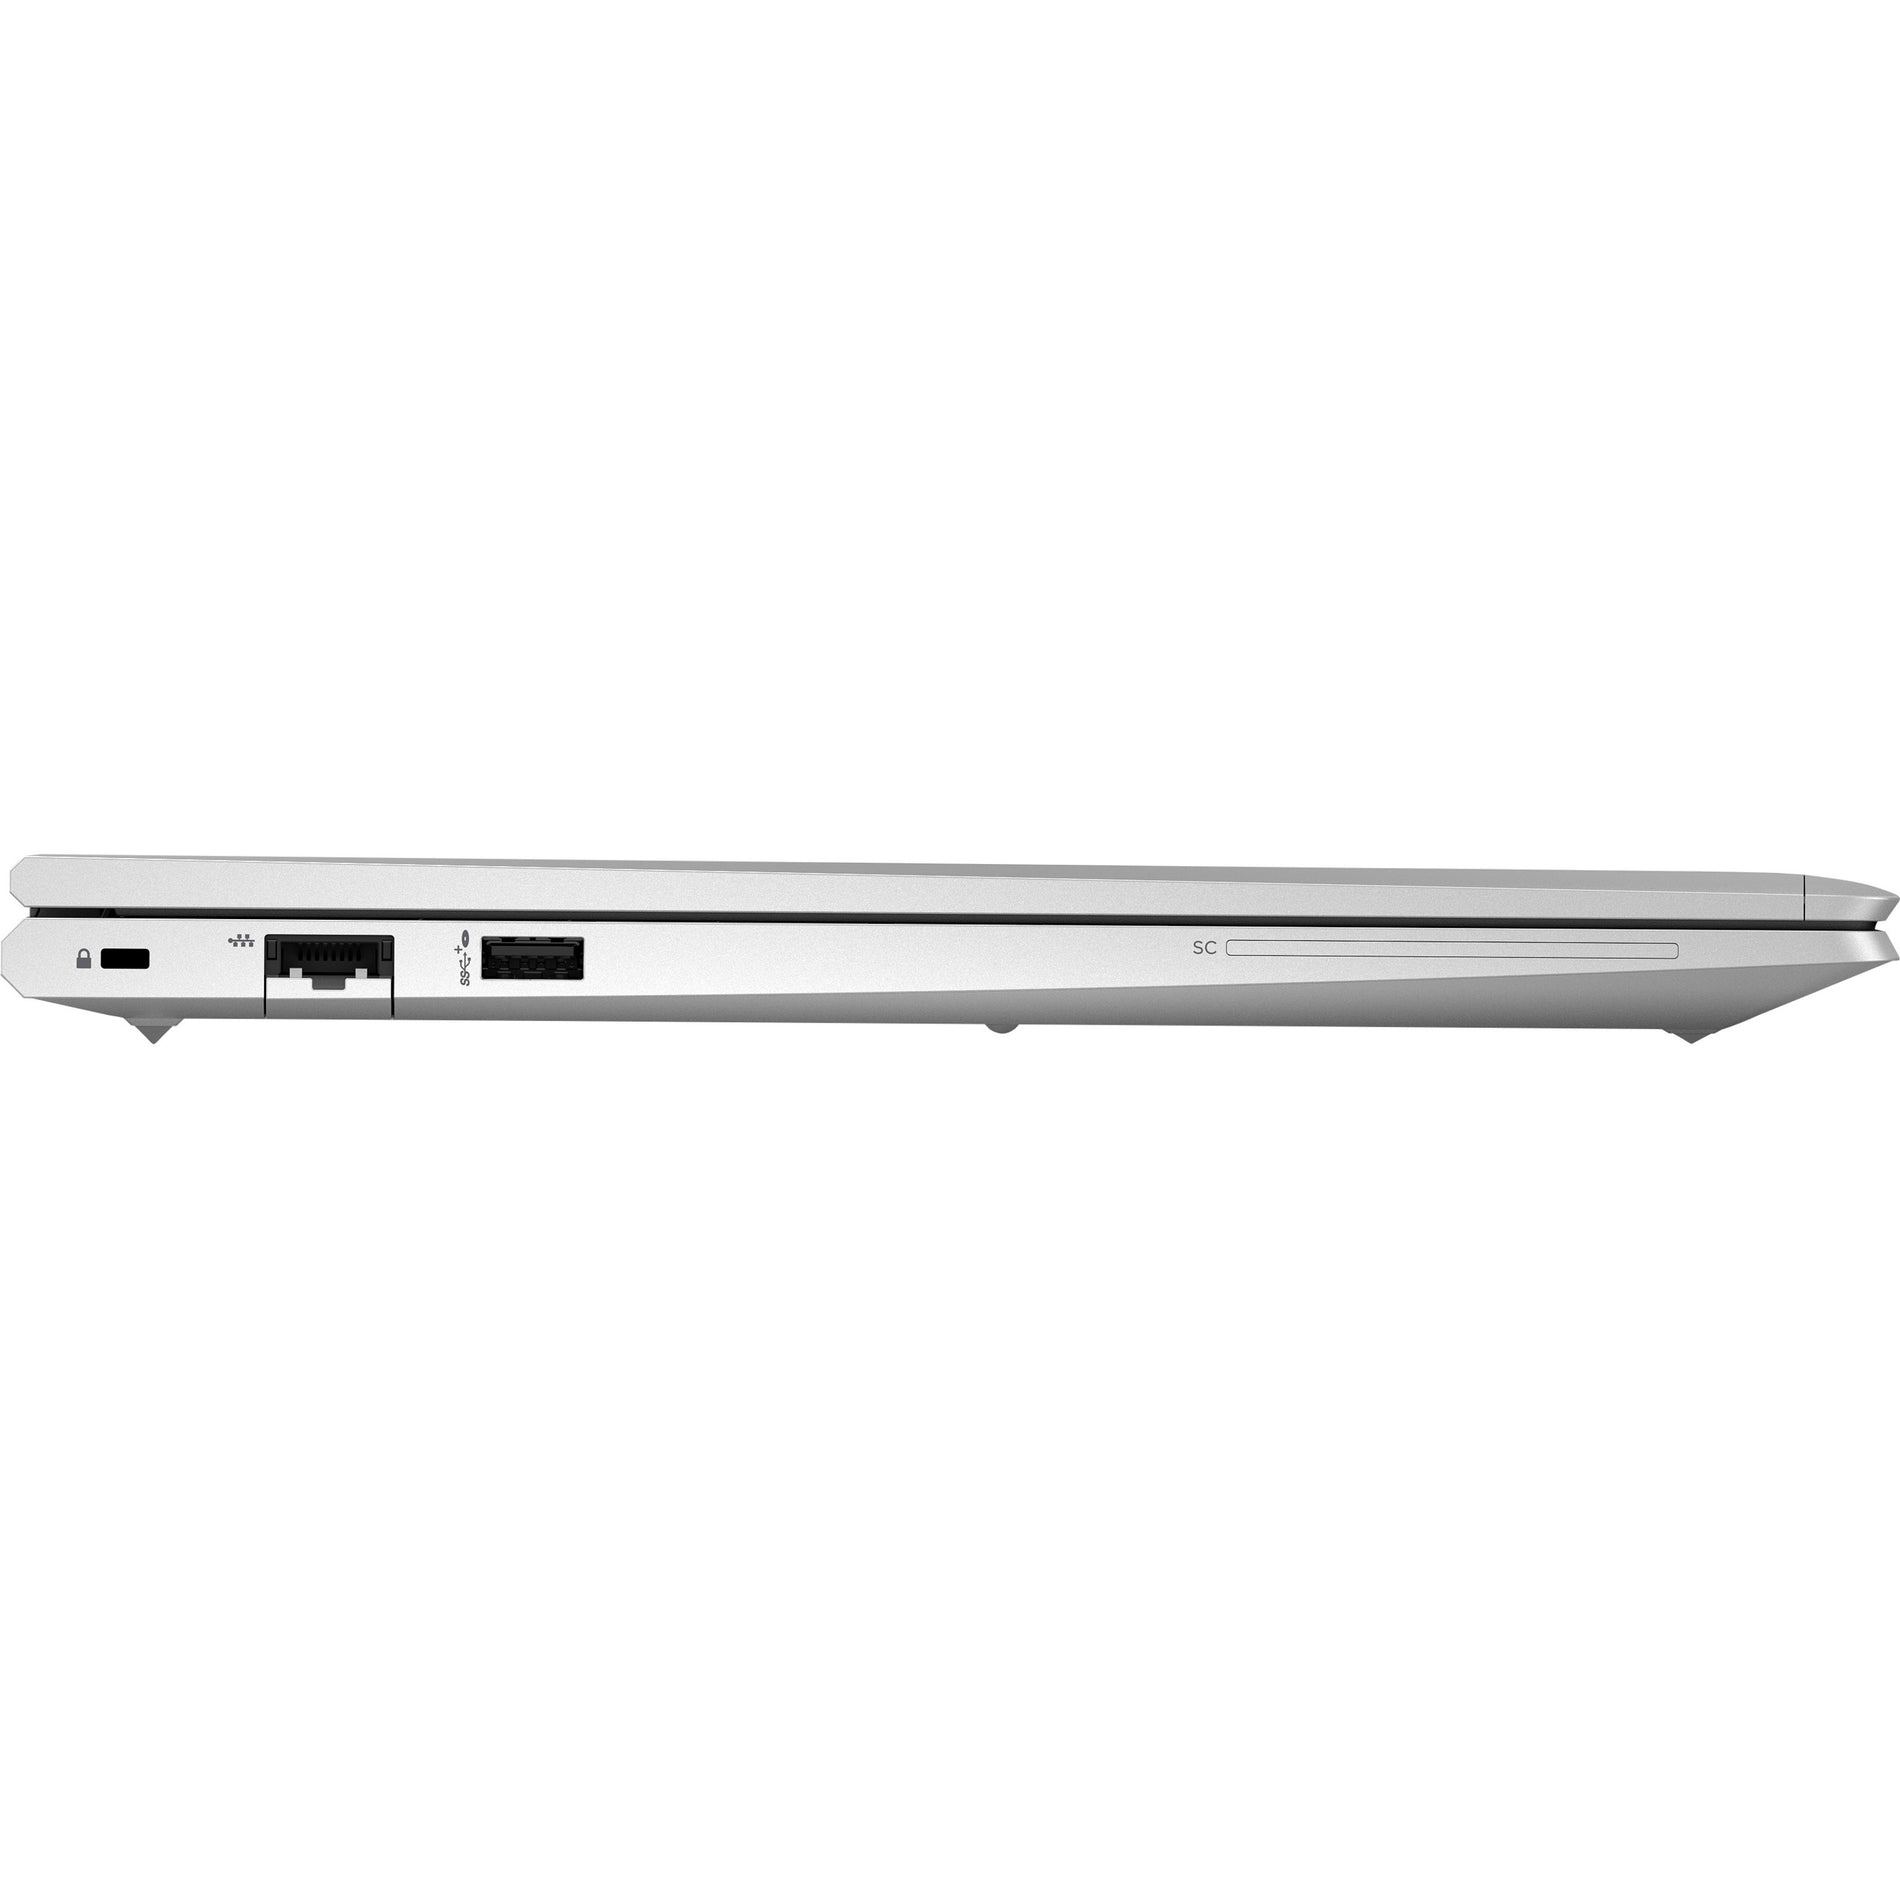 HP ProBook 650 G8 Notebook, Intel i5-1145G7, 15.6" FHD, 16GB RAM, 256GB SSD, Windows 10 Pro